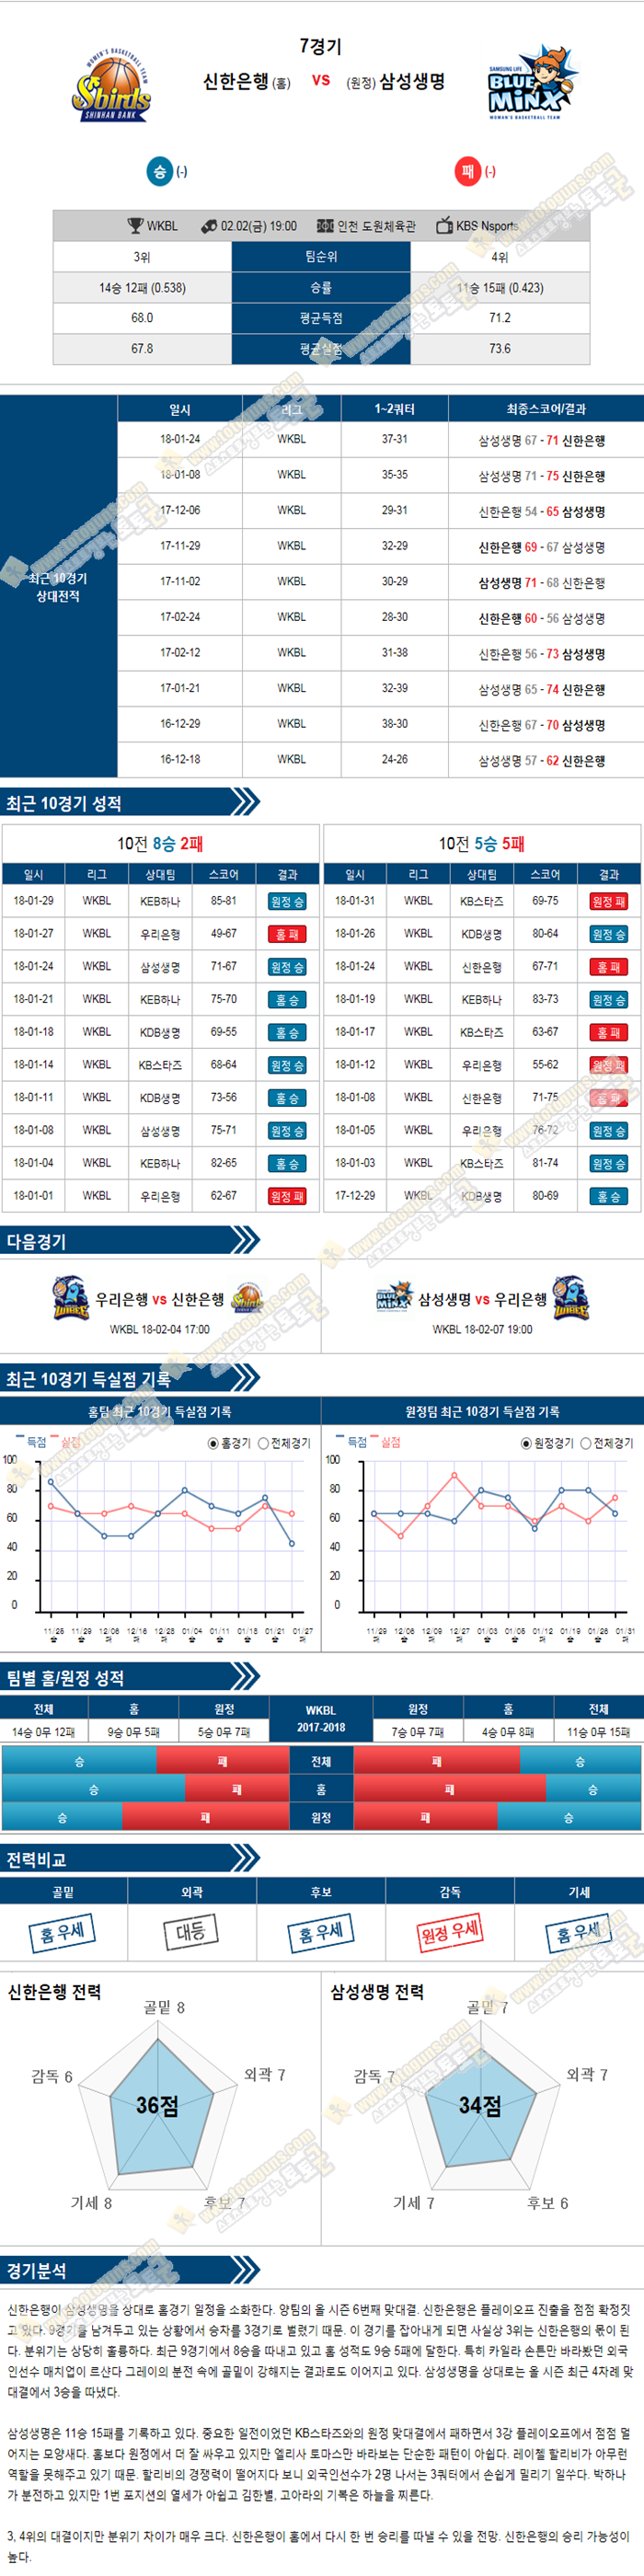 [WKBL] 2월 2일 19:00 여자농구분석 신한은행 vs 삼성생명